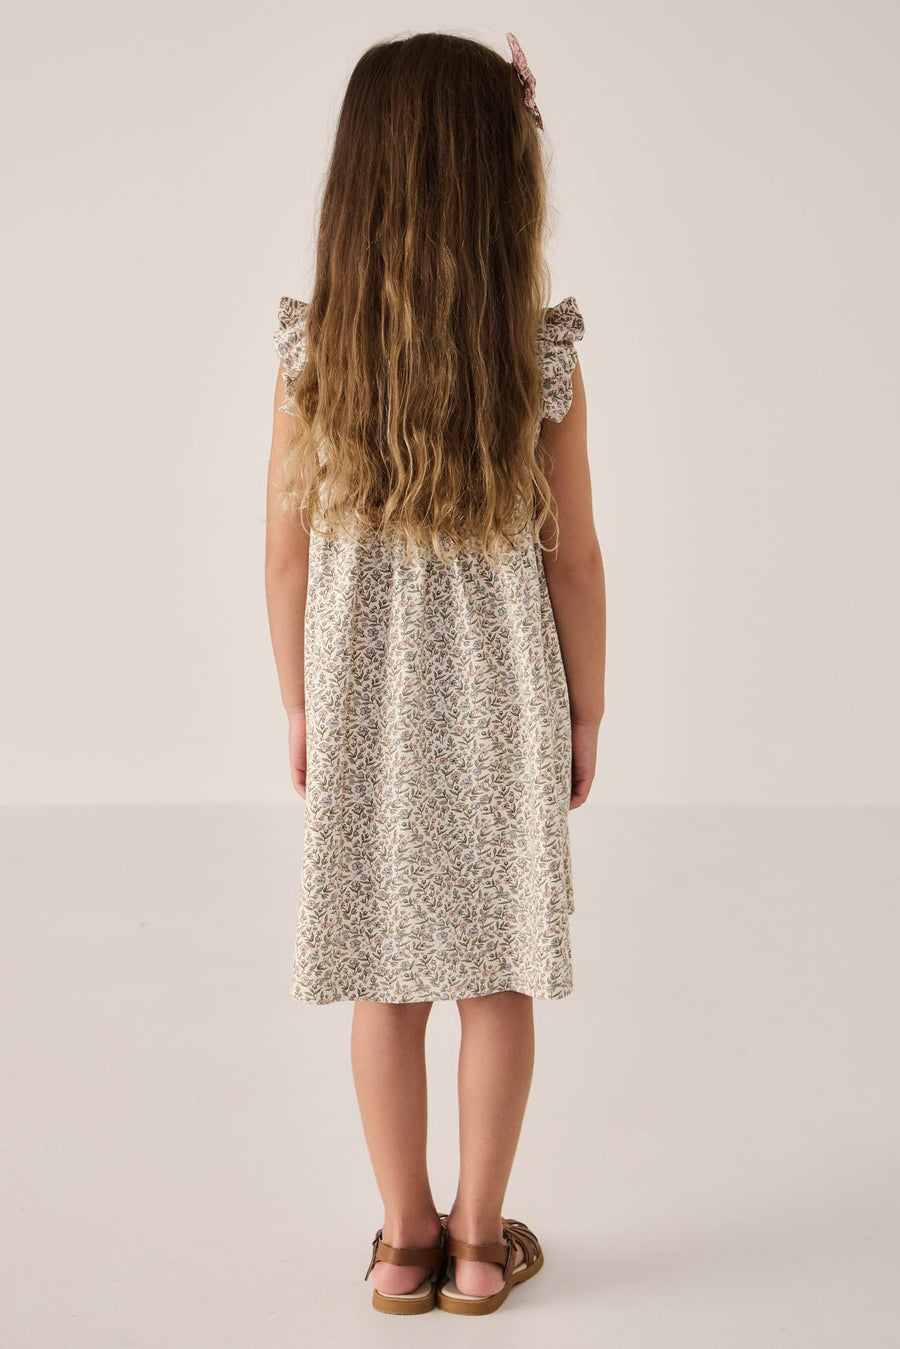 Organic Cotton Sienna Dress - Ariella Eggnog Childrens Dress from Jamie Kay USA